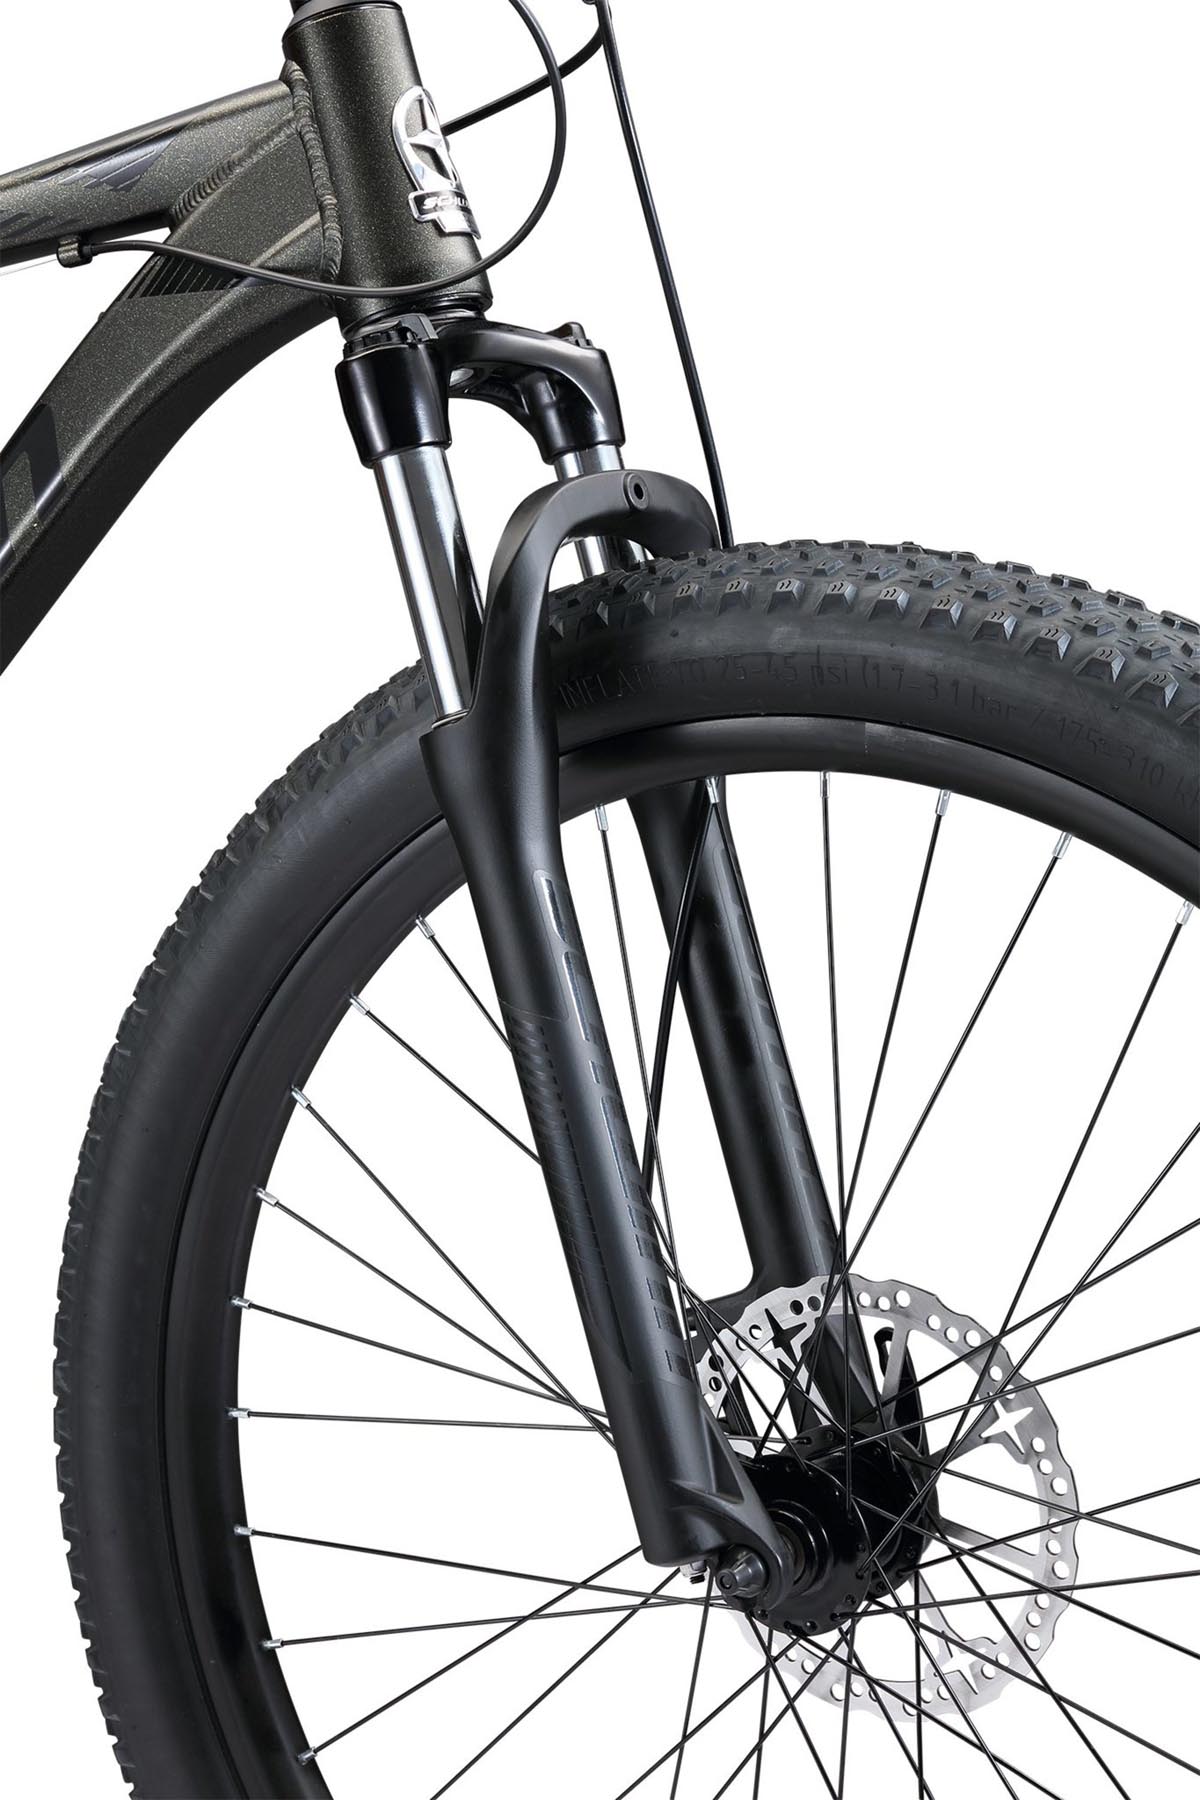 Schwinn Axum mountain bike rolls 1x drivetrain & 29 x 2.6" tires for less than $400